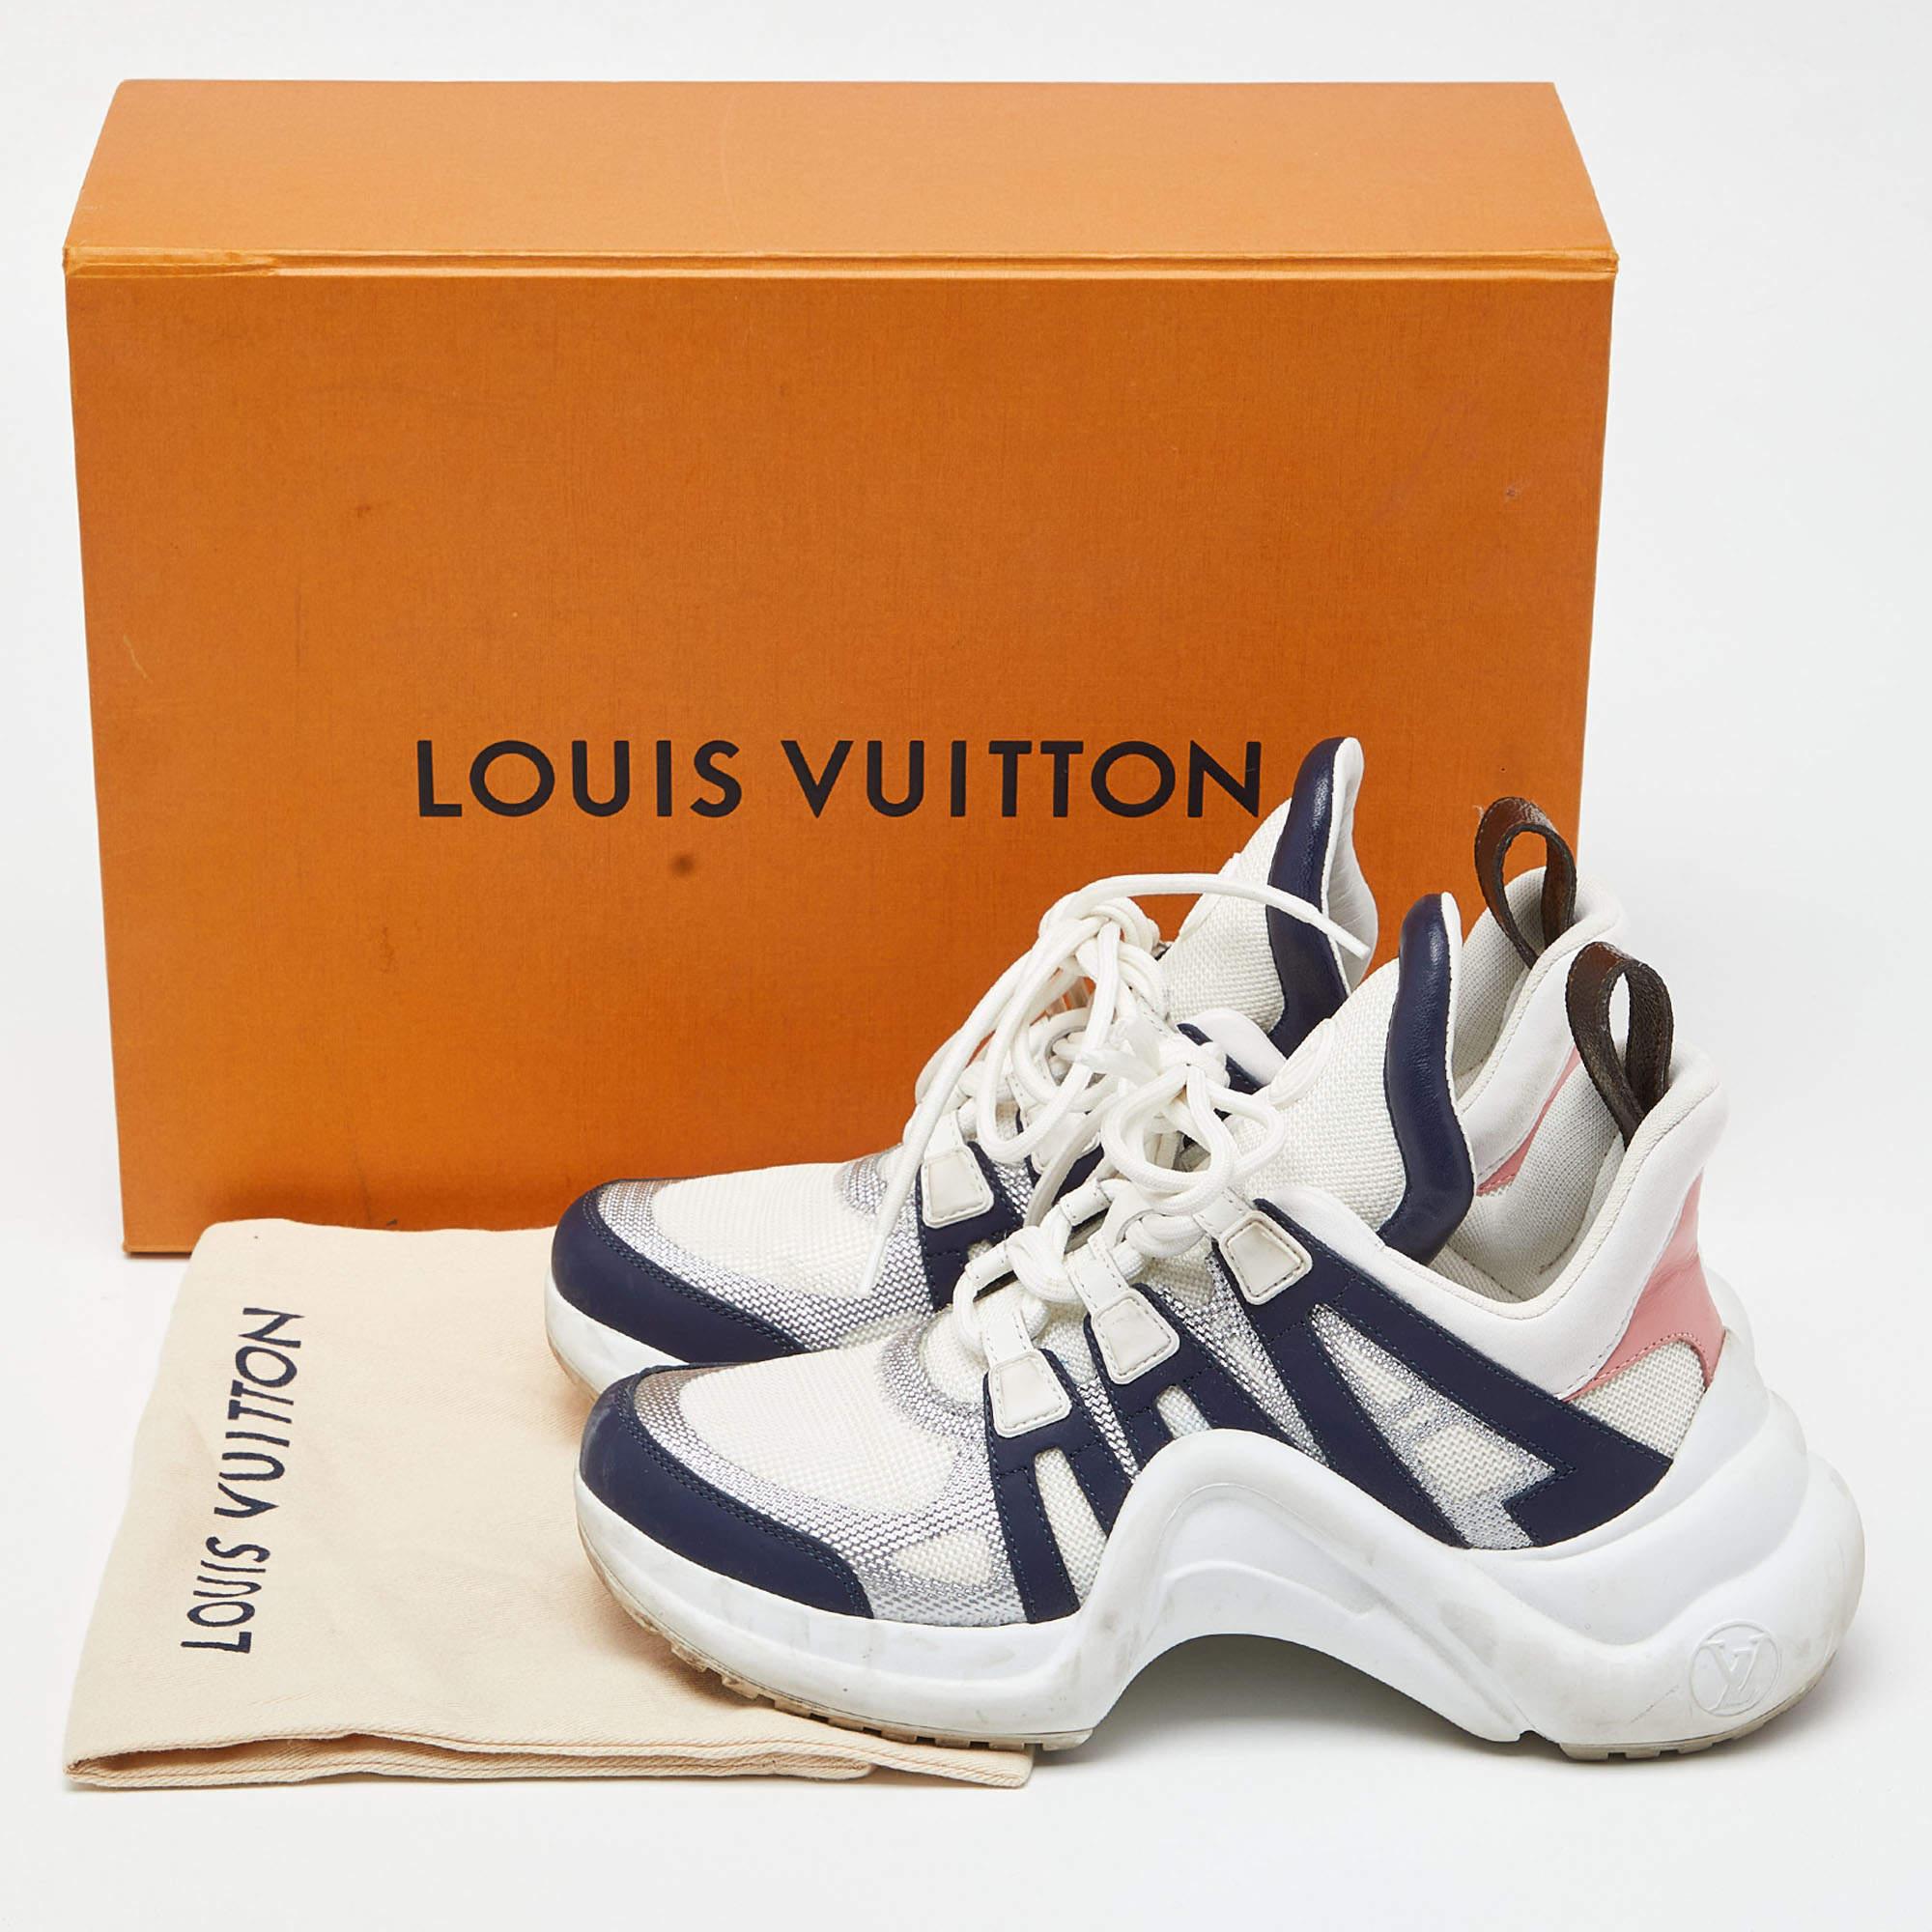 Louis Vuitton Multicolor Mesh and Leather Archlight Sneakers Size 36.5 In Fair Condition For Sale In Dubai, Al Qouz 2